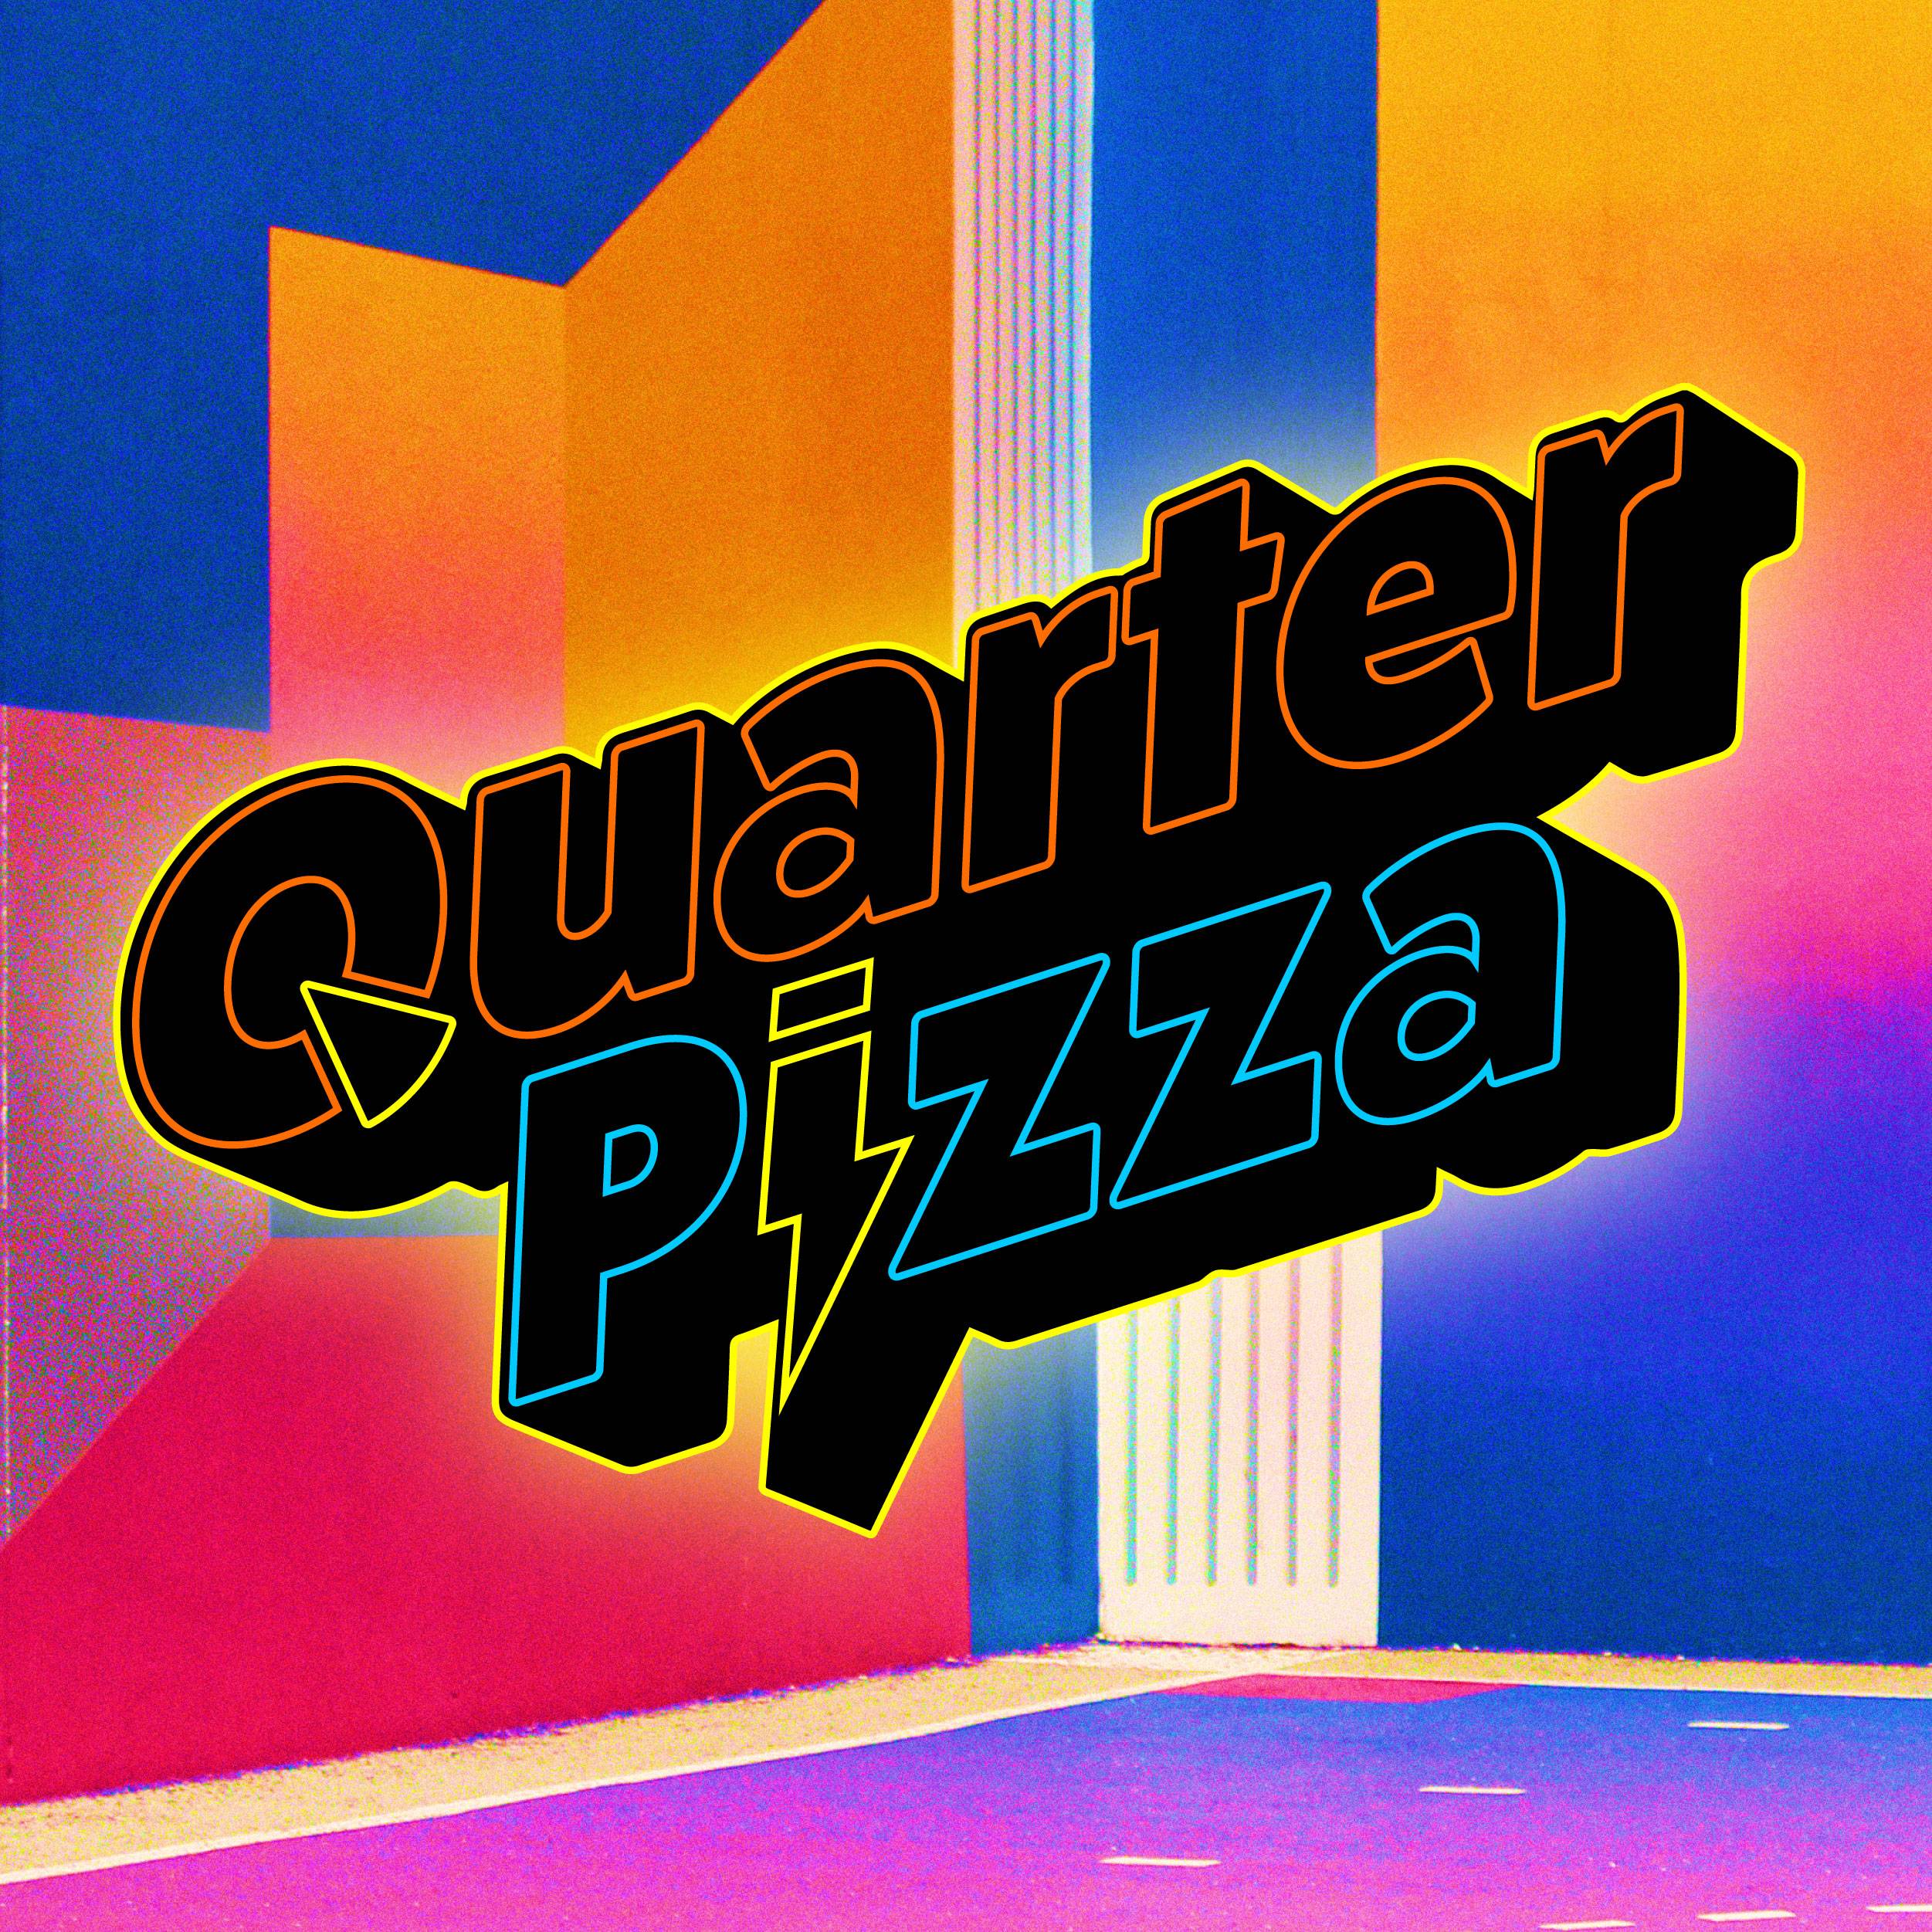  | Quarter Pizza 피자브랜드 로고 컨테스트 | 라우드소싱 포트폴리오